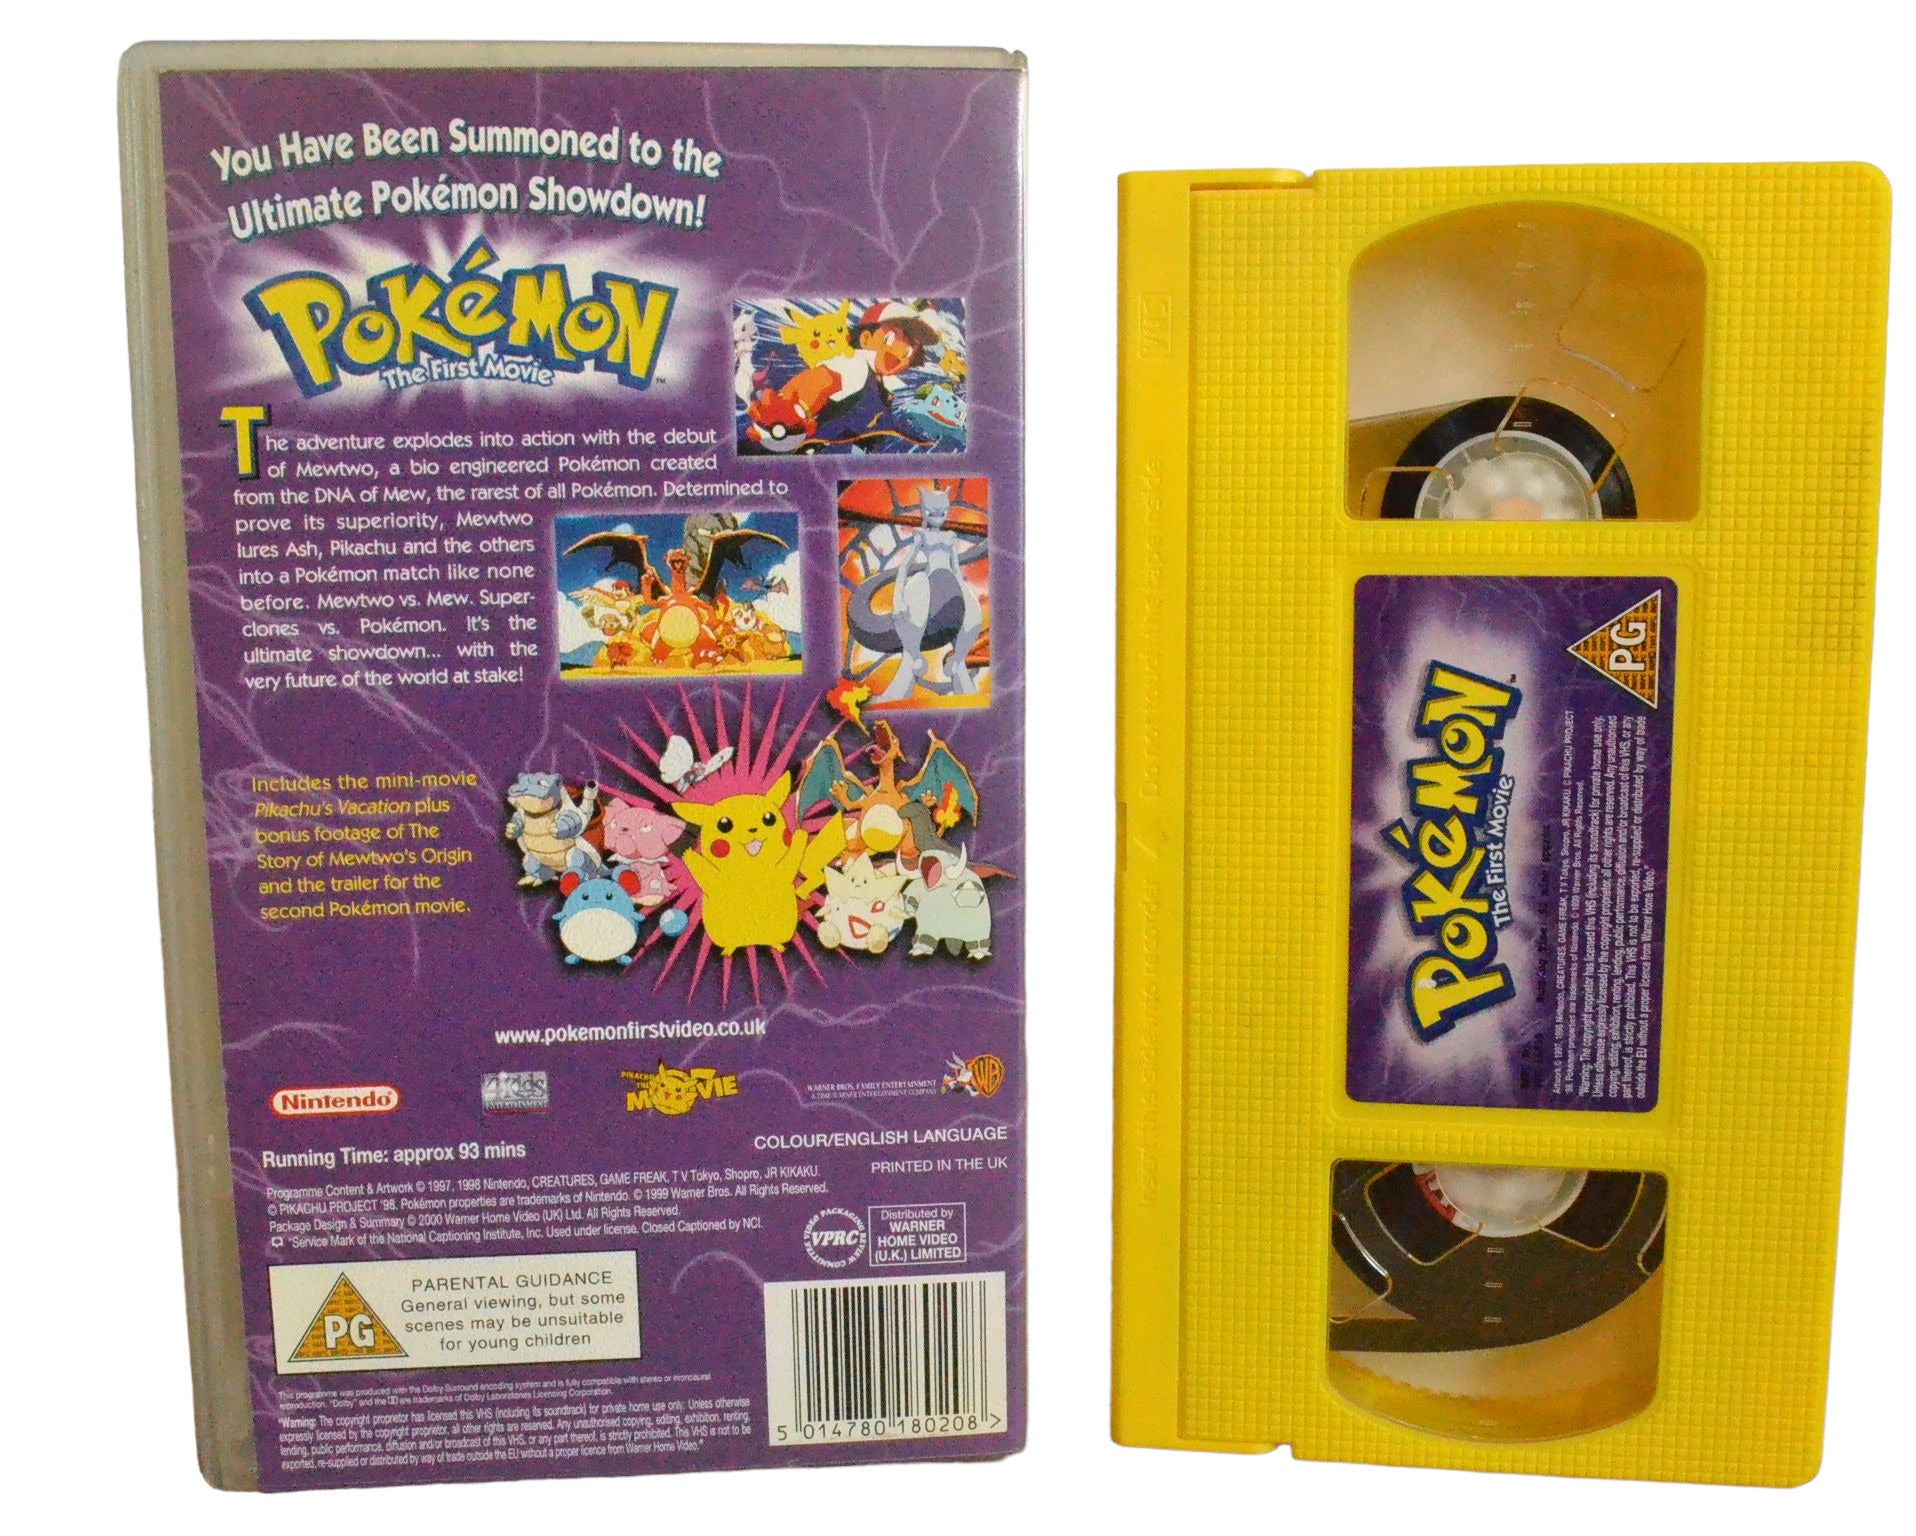 Pokemon : The First Movie - Warner Home Video - SO18020 - Children - Pal - VHS-